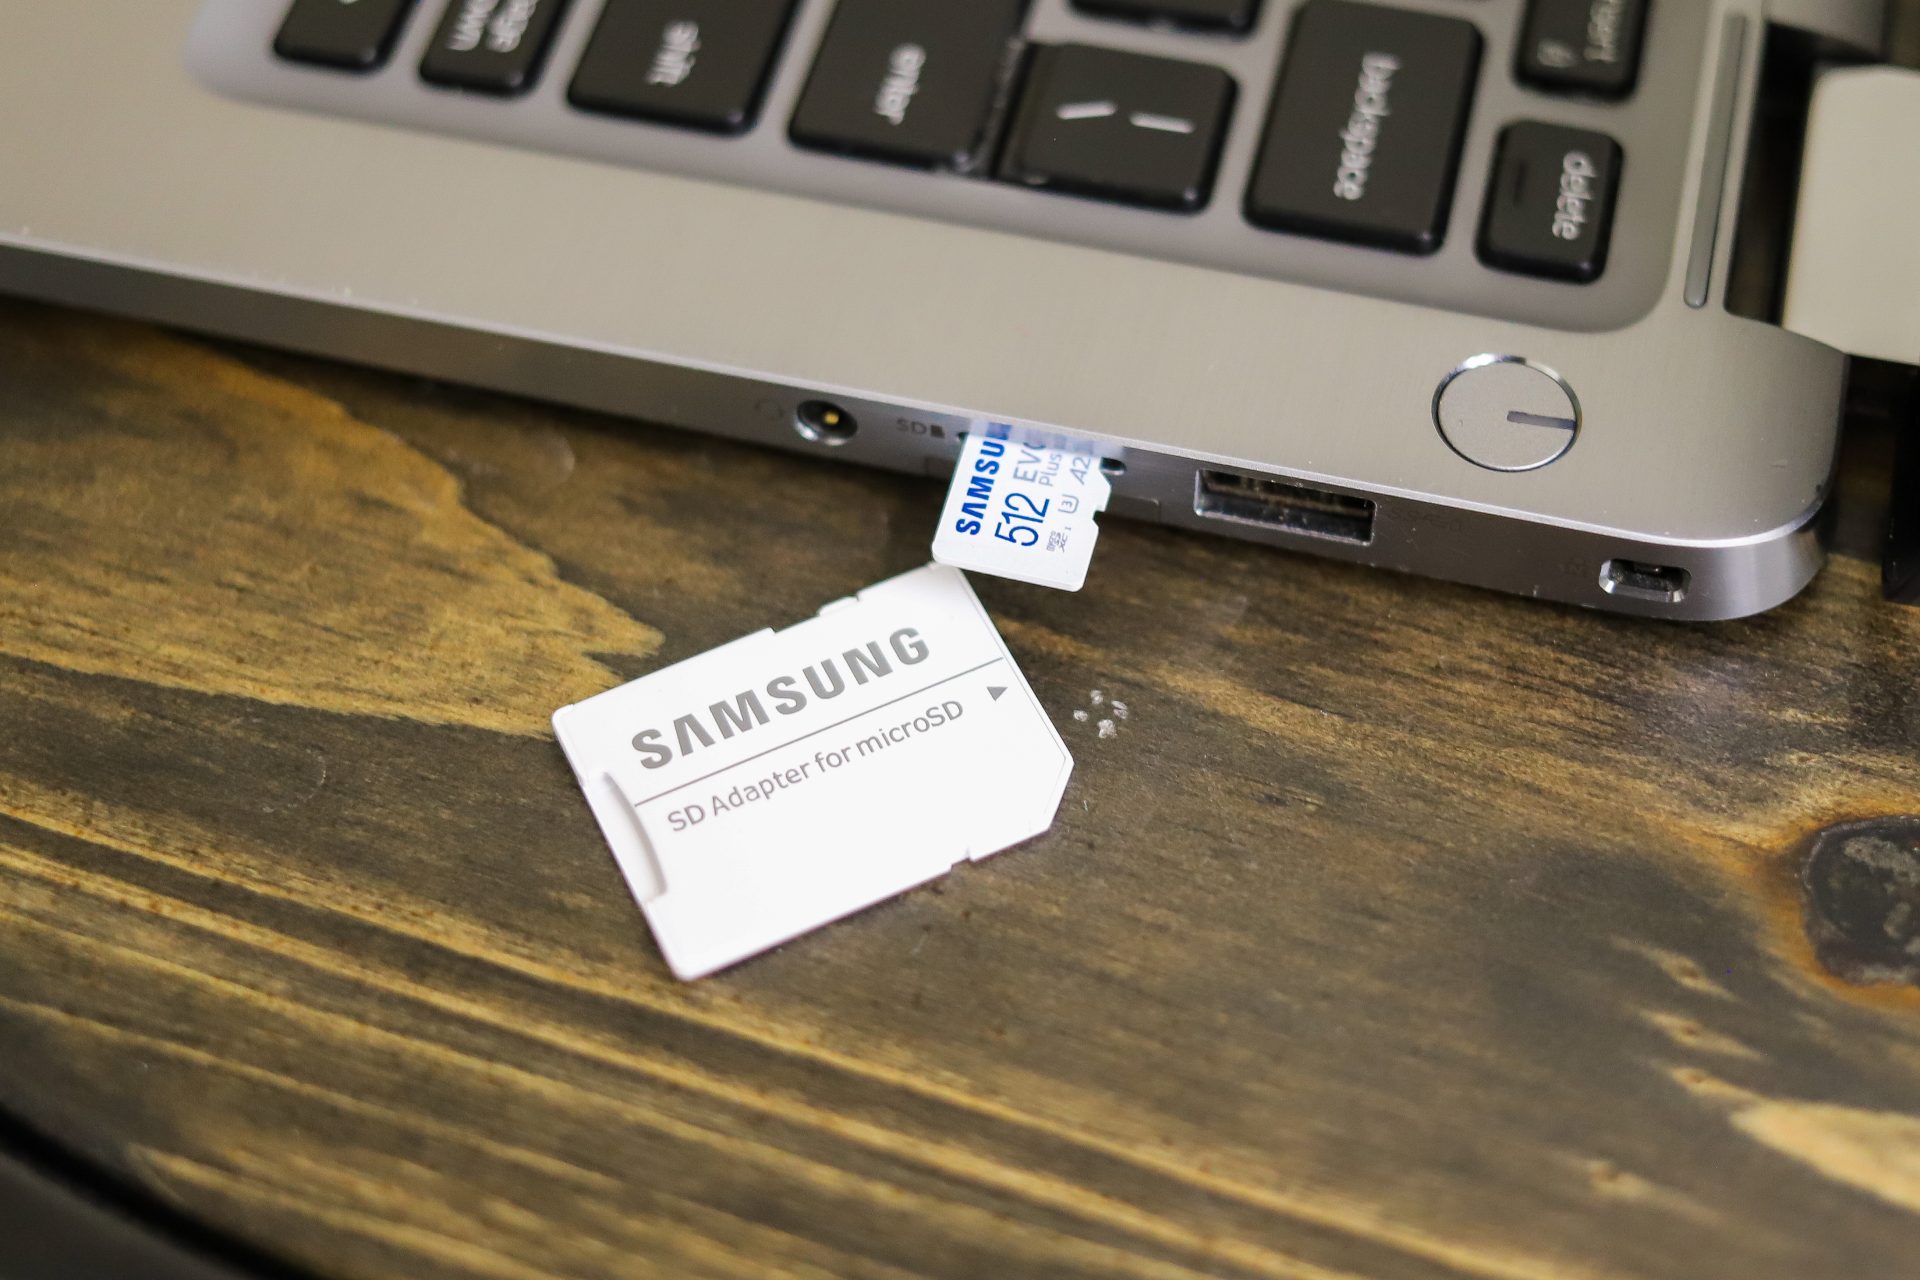 Samsung - Carte Mémoire Micro SD EVO Plus 512 Go